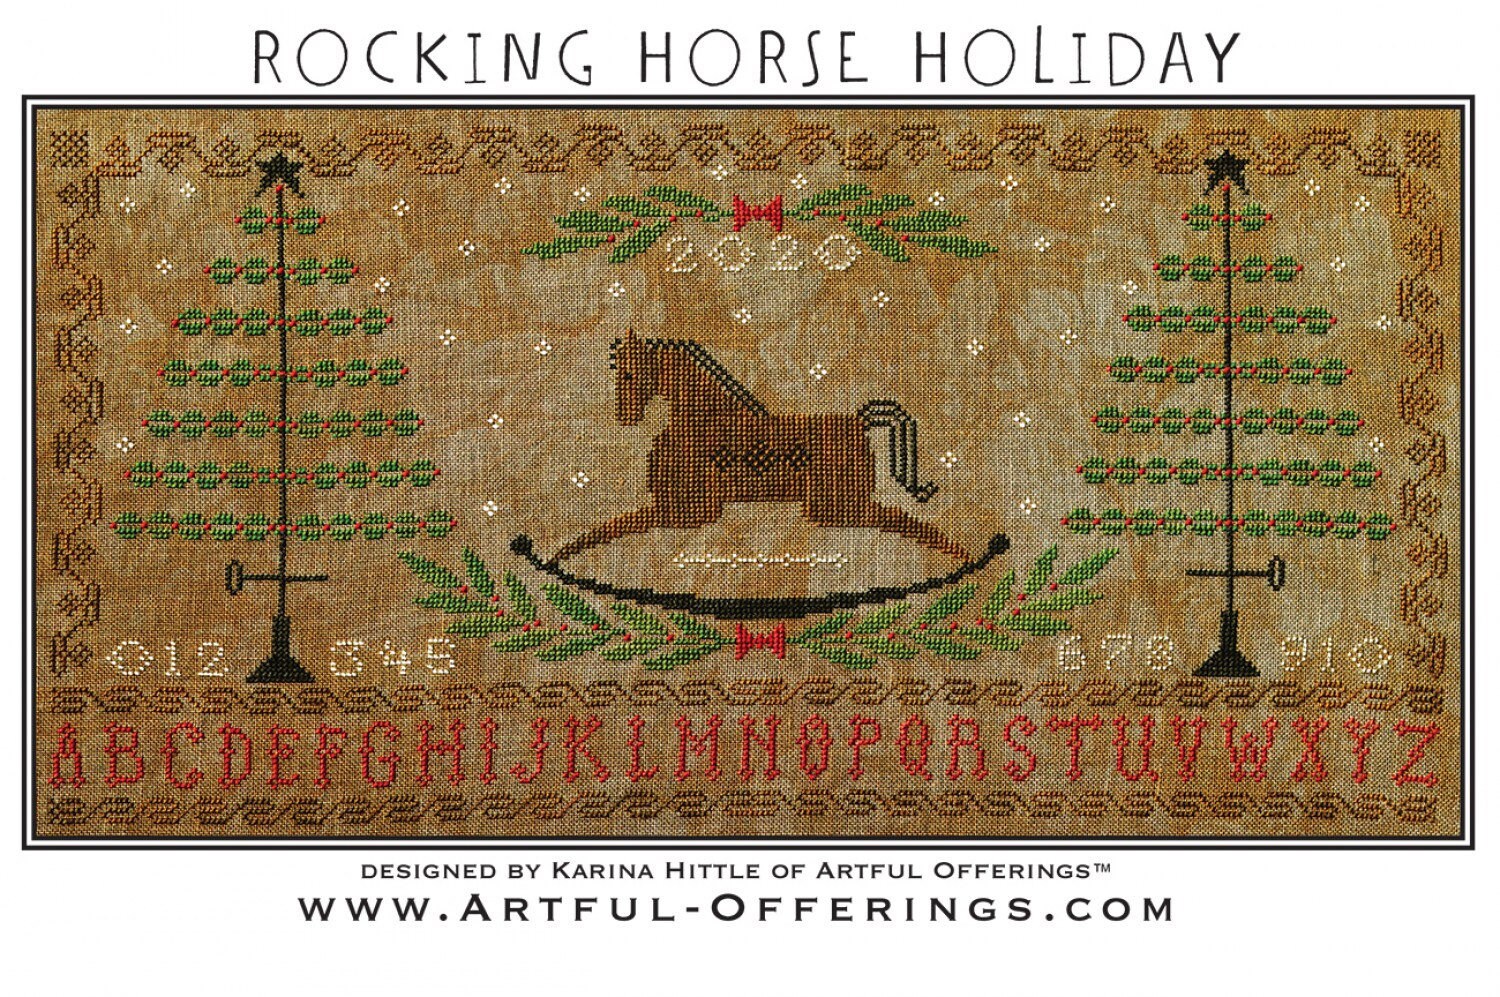 Rocking Horse Holiday Cross Stitch Pattern - Artful Offerings - Karina Hittle